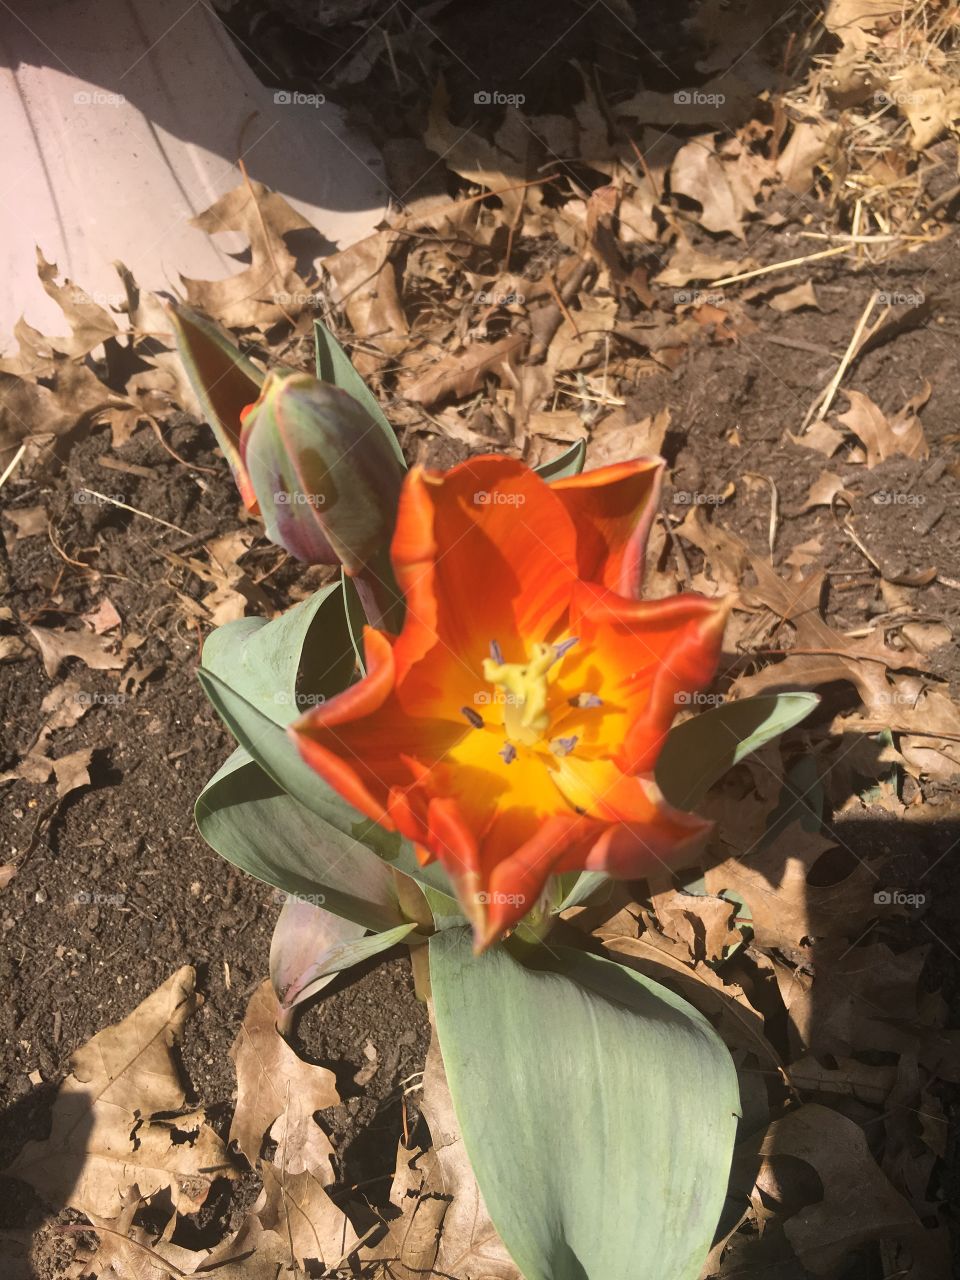 Orange/red tulip with yellow center